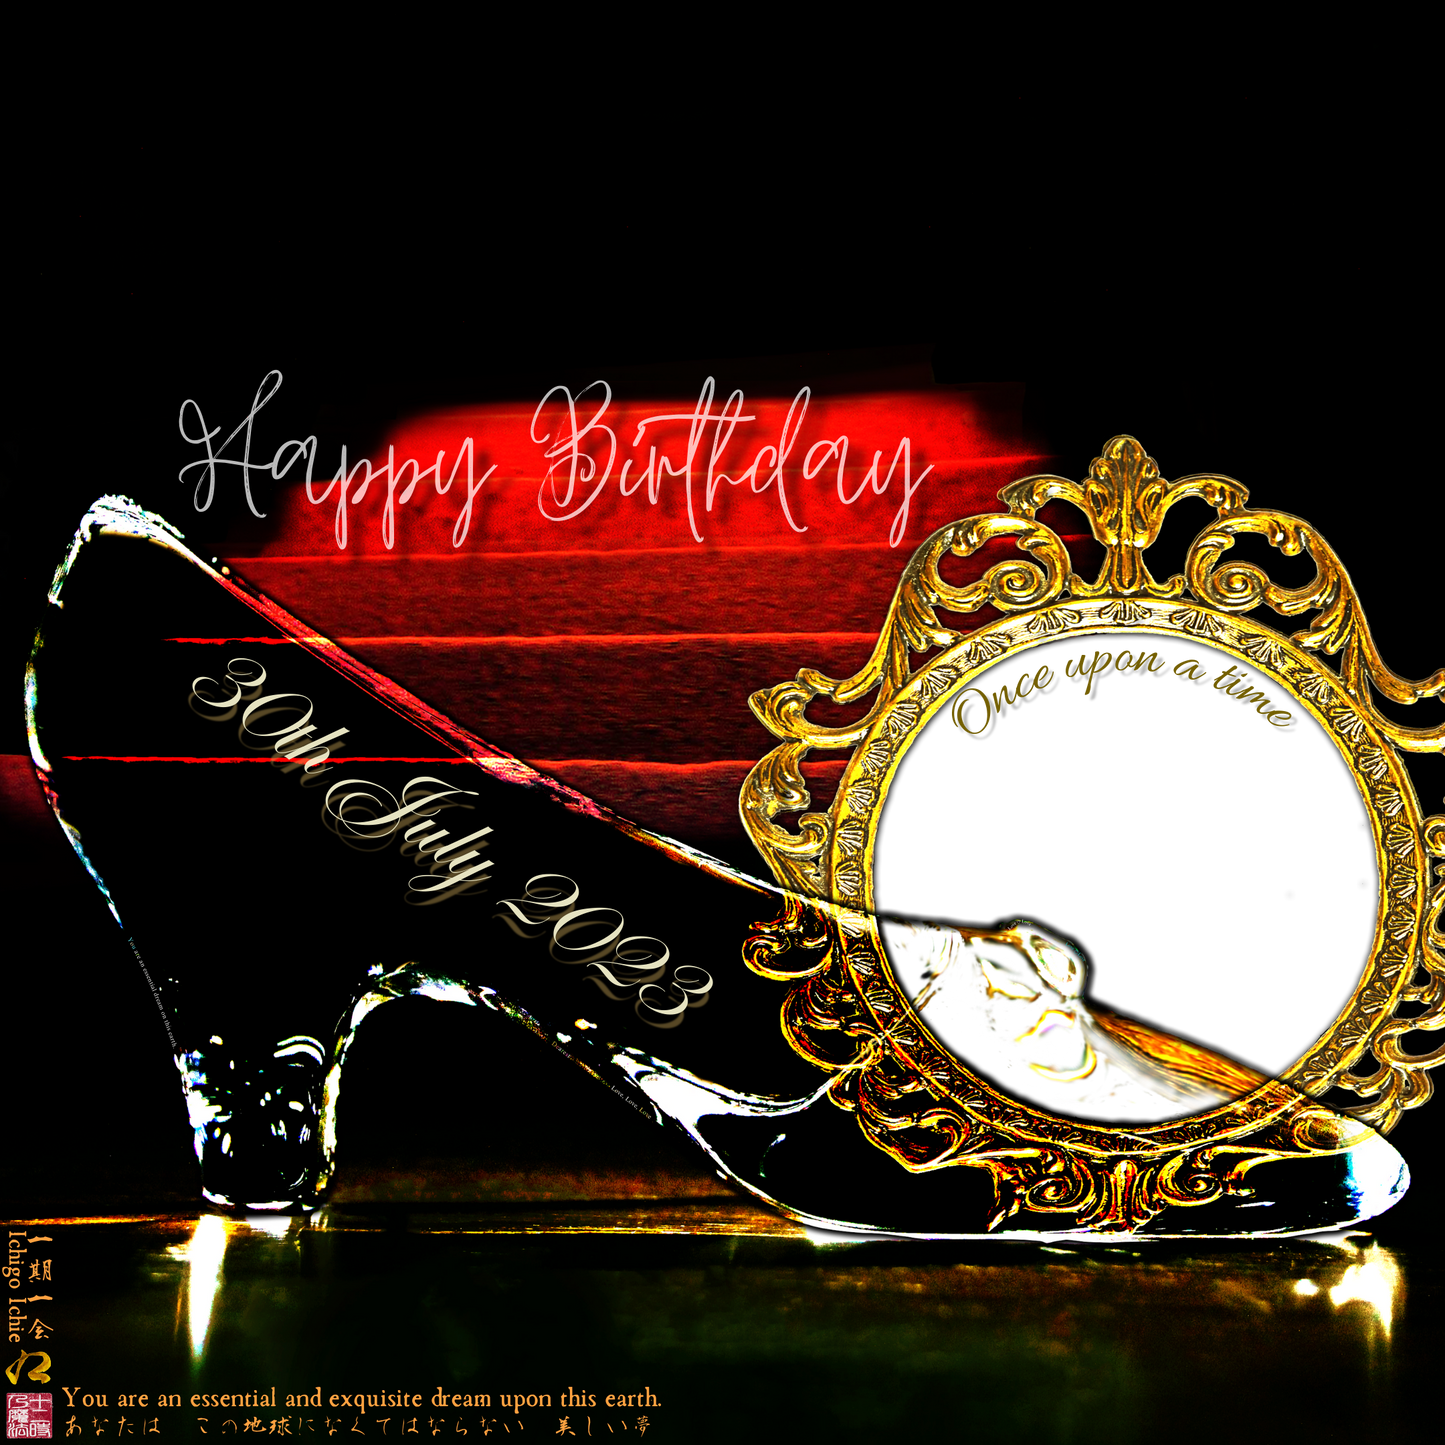 Happy Birthday Glass Slipper "Ichigo Ichie" 30th July 2023 the Right (1-of-1) NFT Art